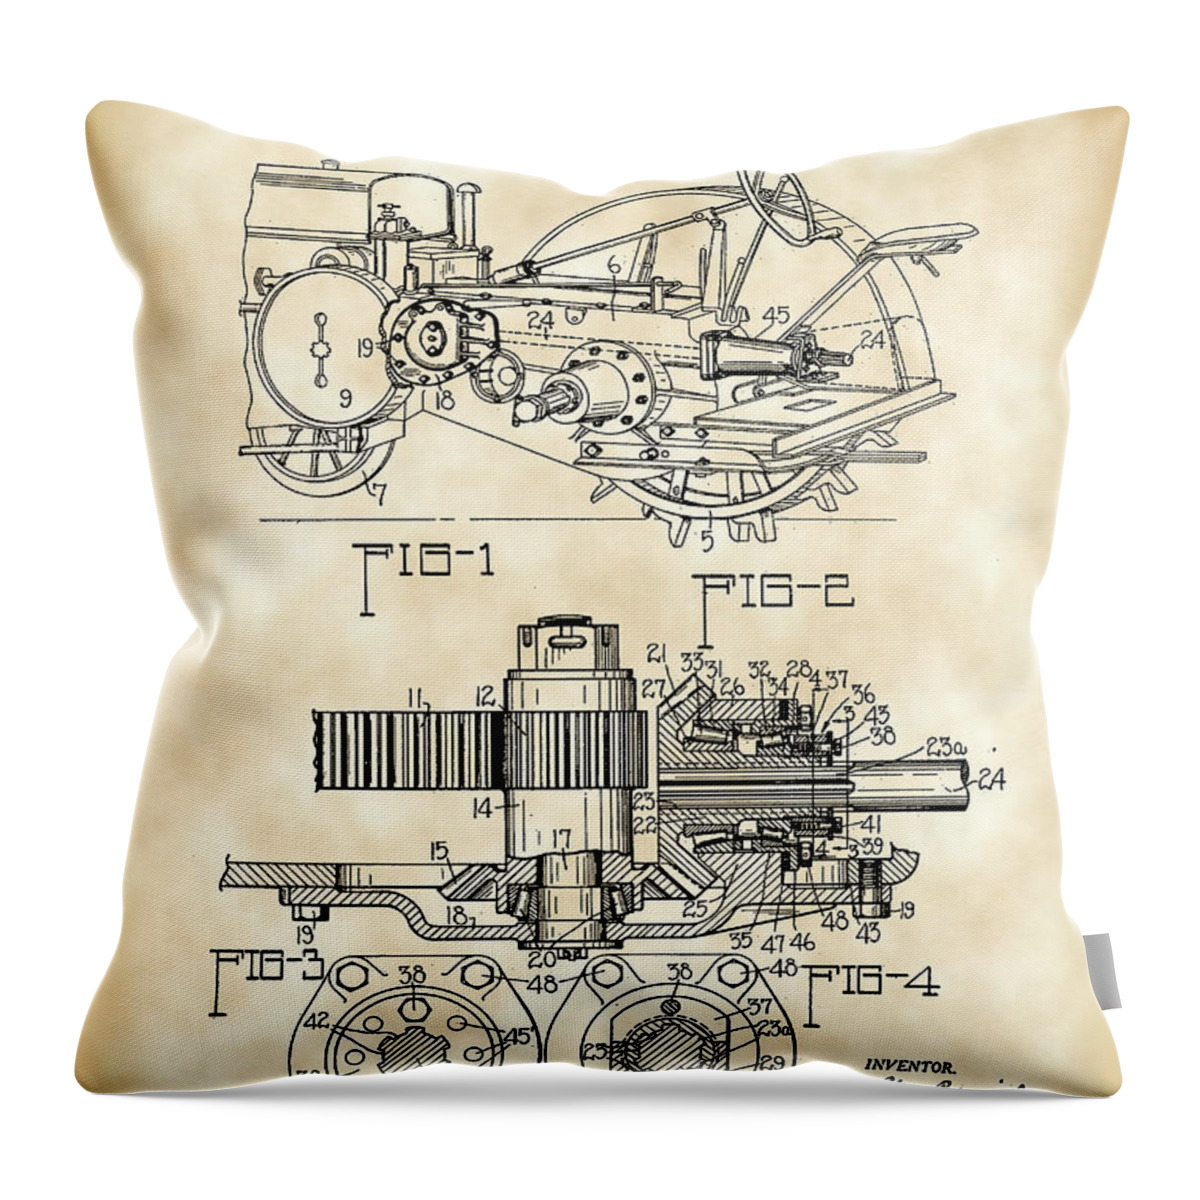 John Deere Throw Pillow featuring the digital art John Deere Tractor Patent 1932 - Vintage by Stephen Younts